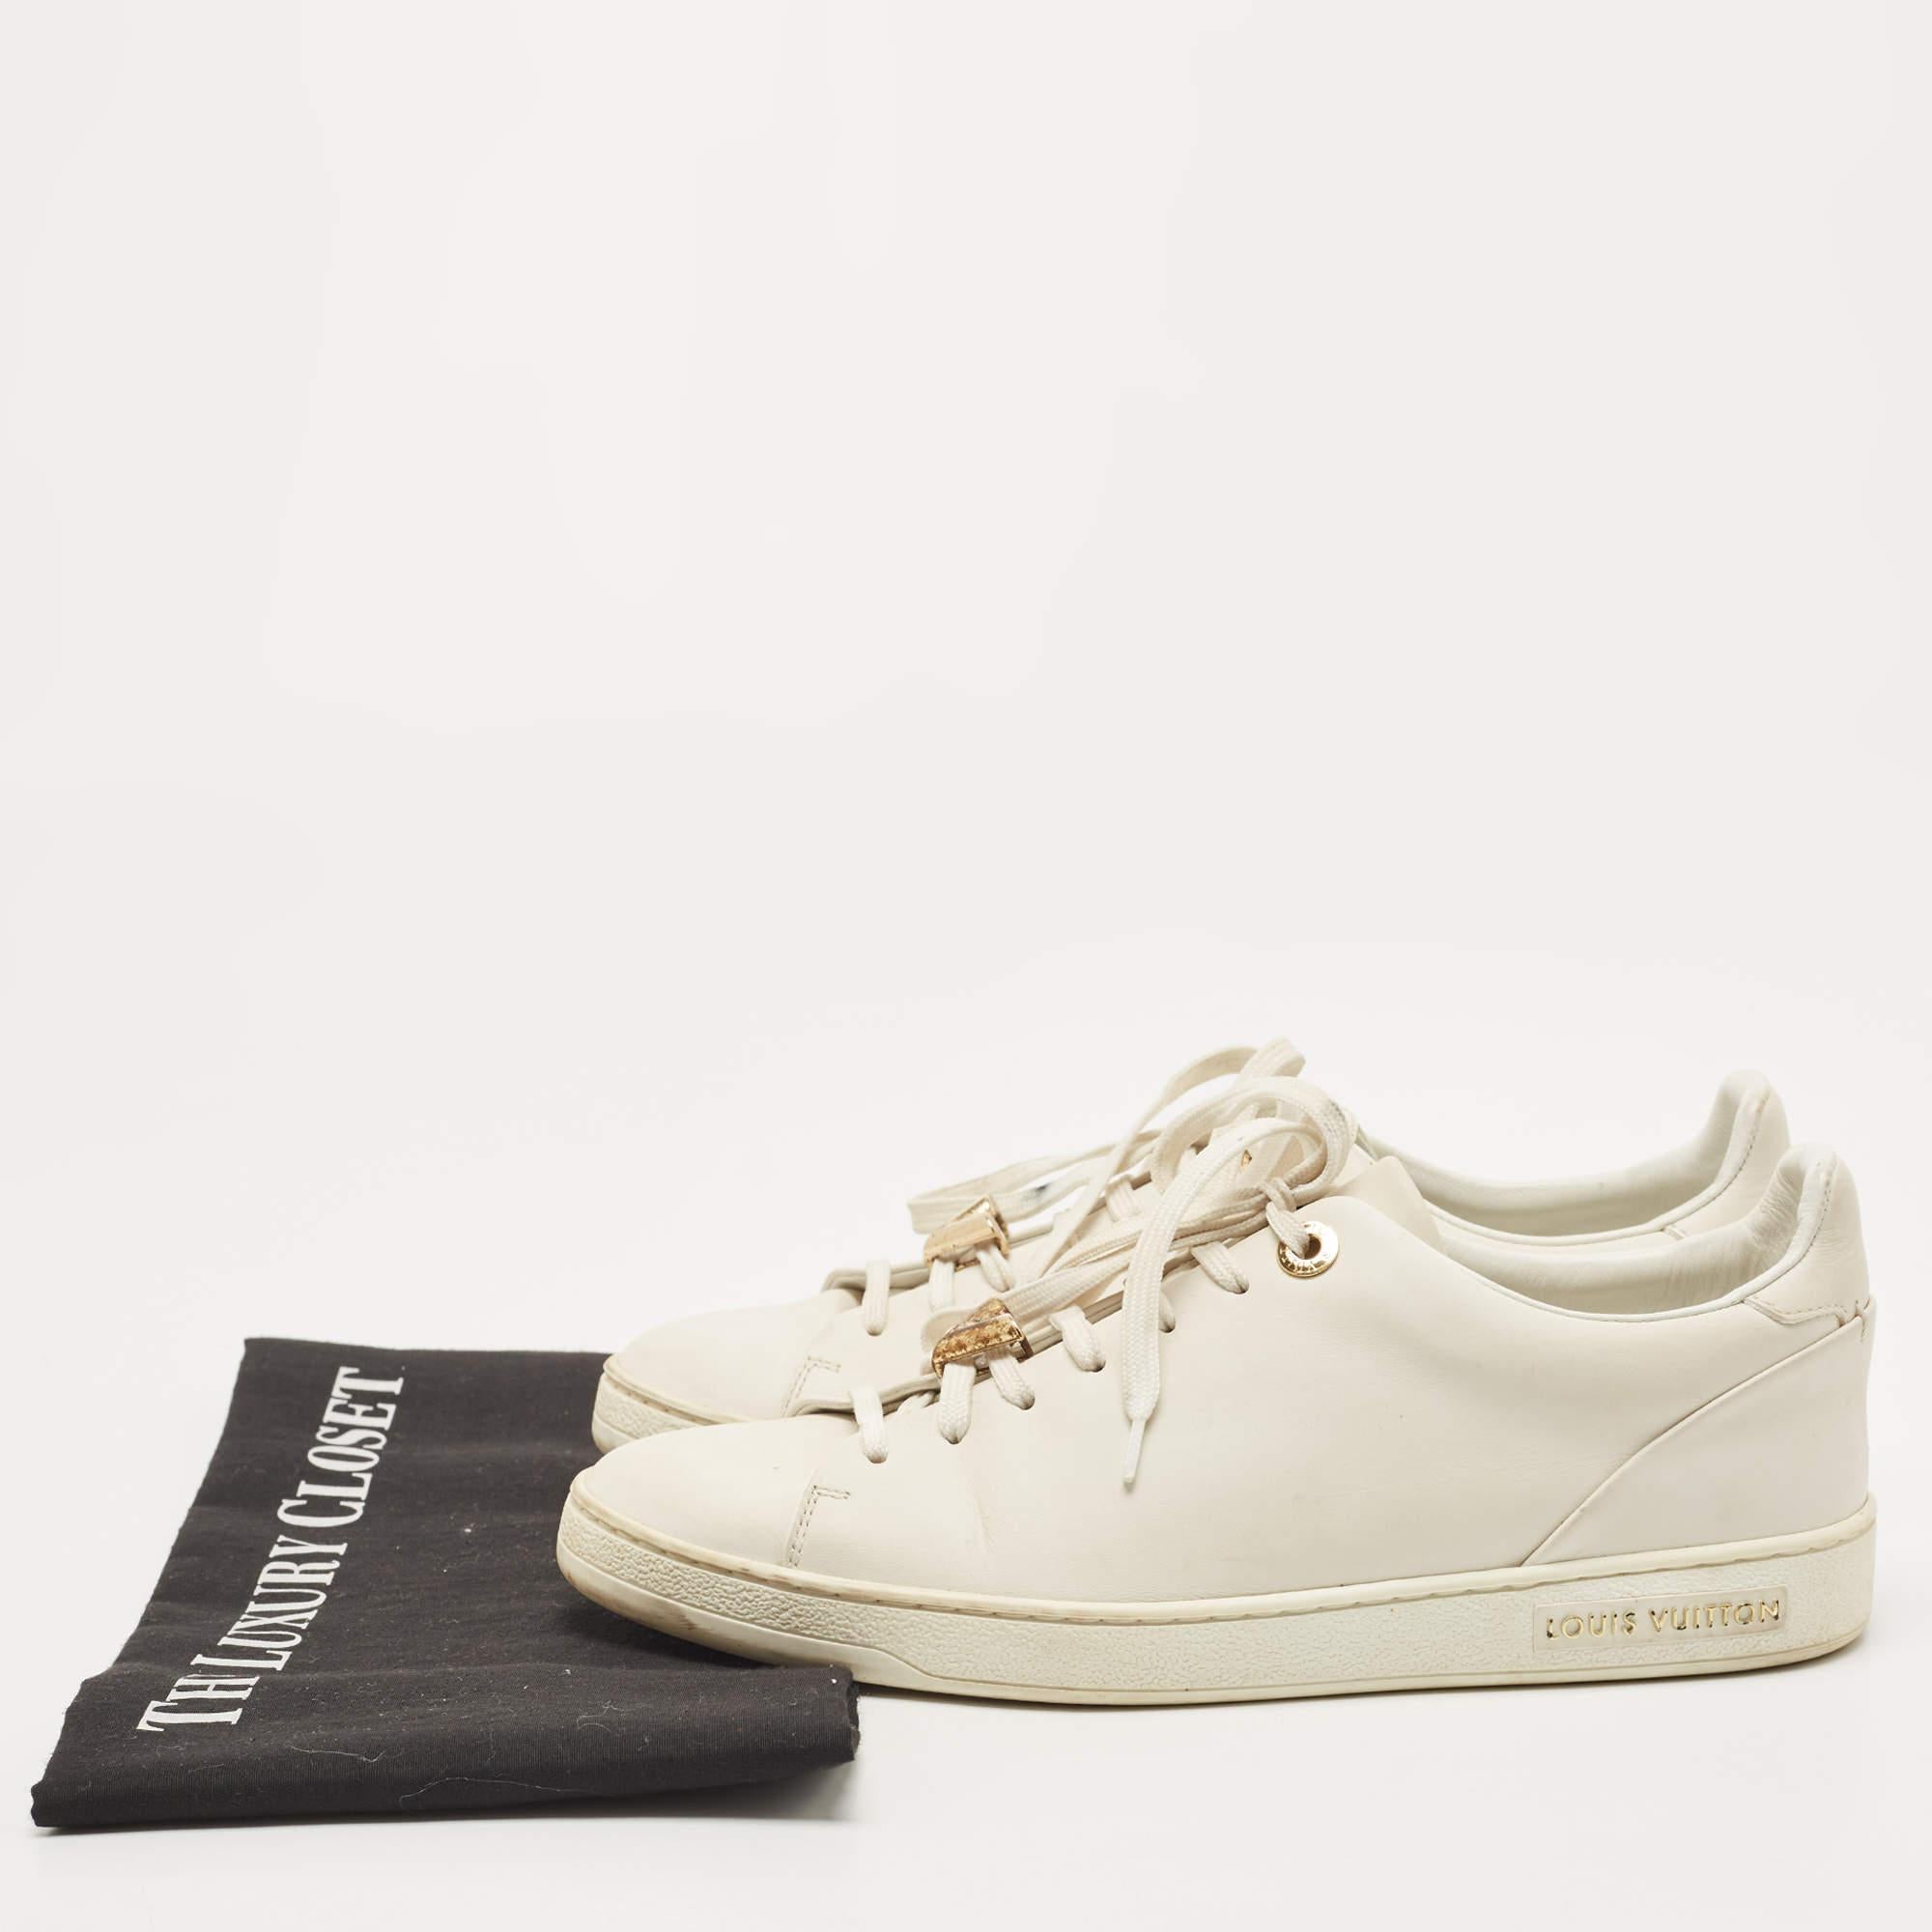 Louis Vuitton White Leather Frontrow Sneakers Size 38 7